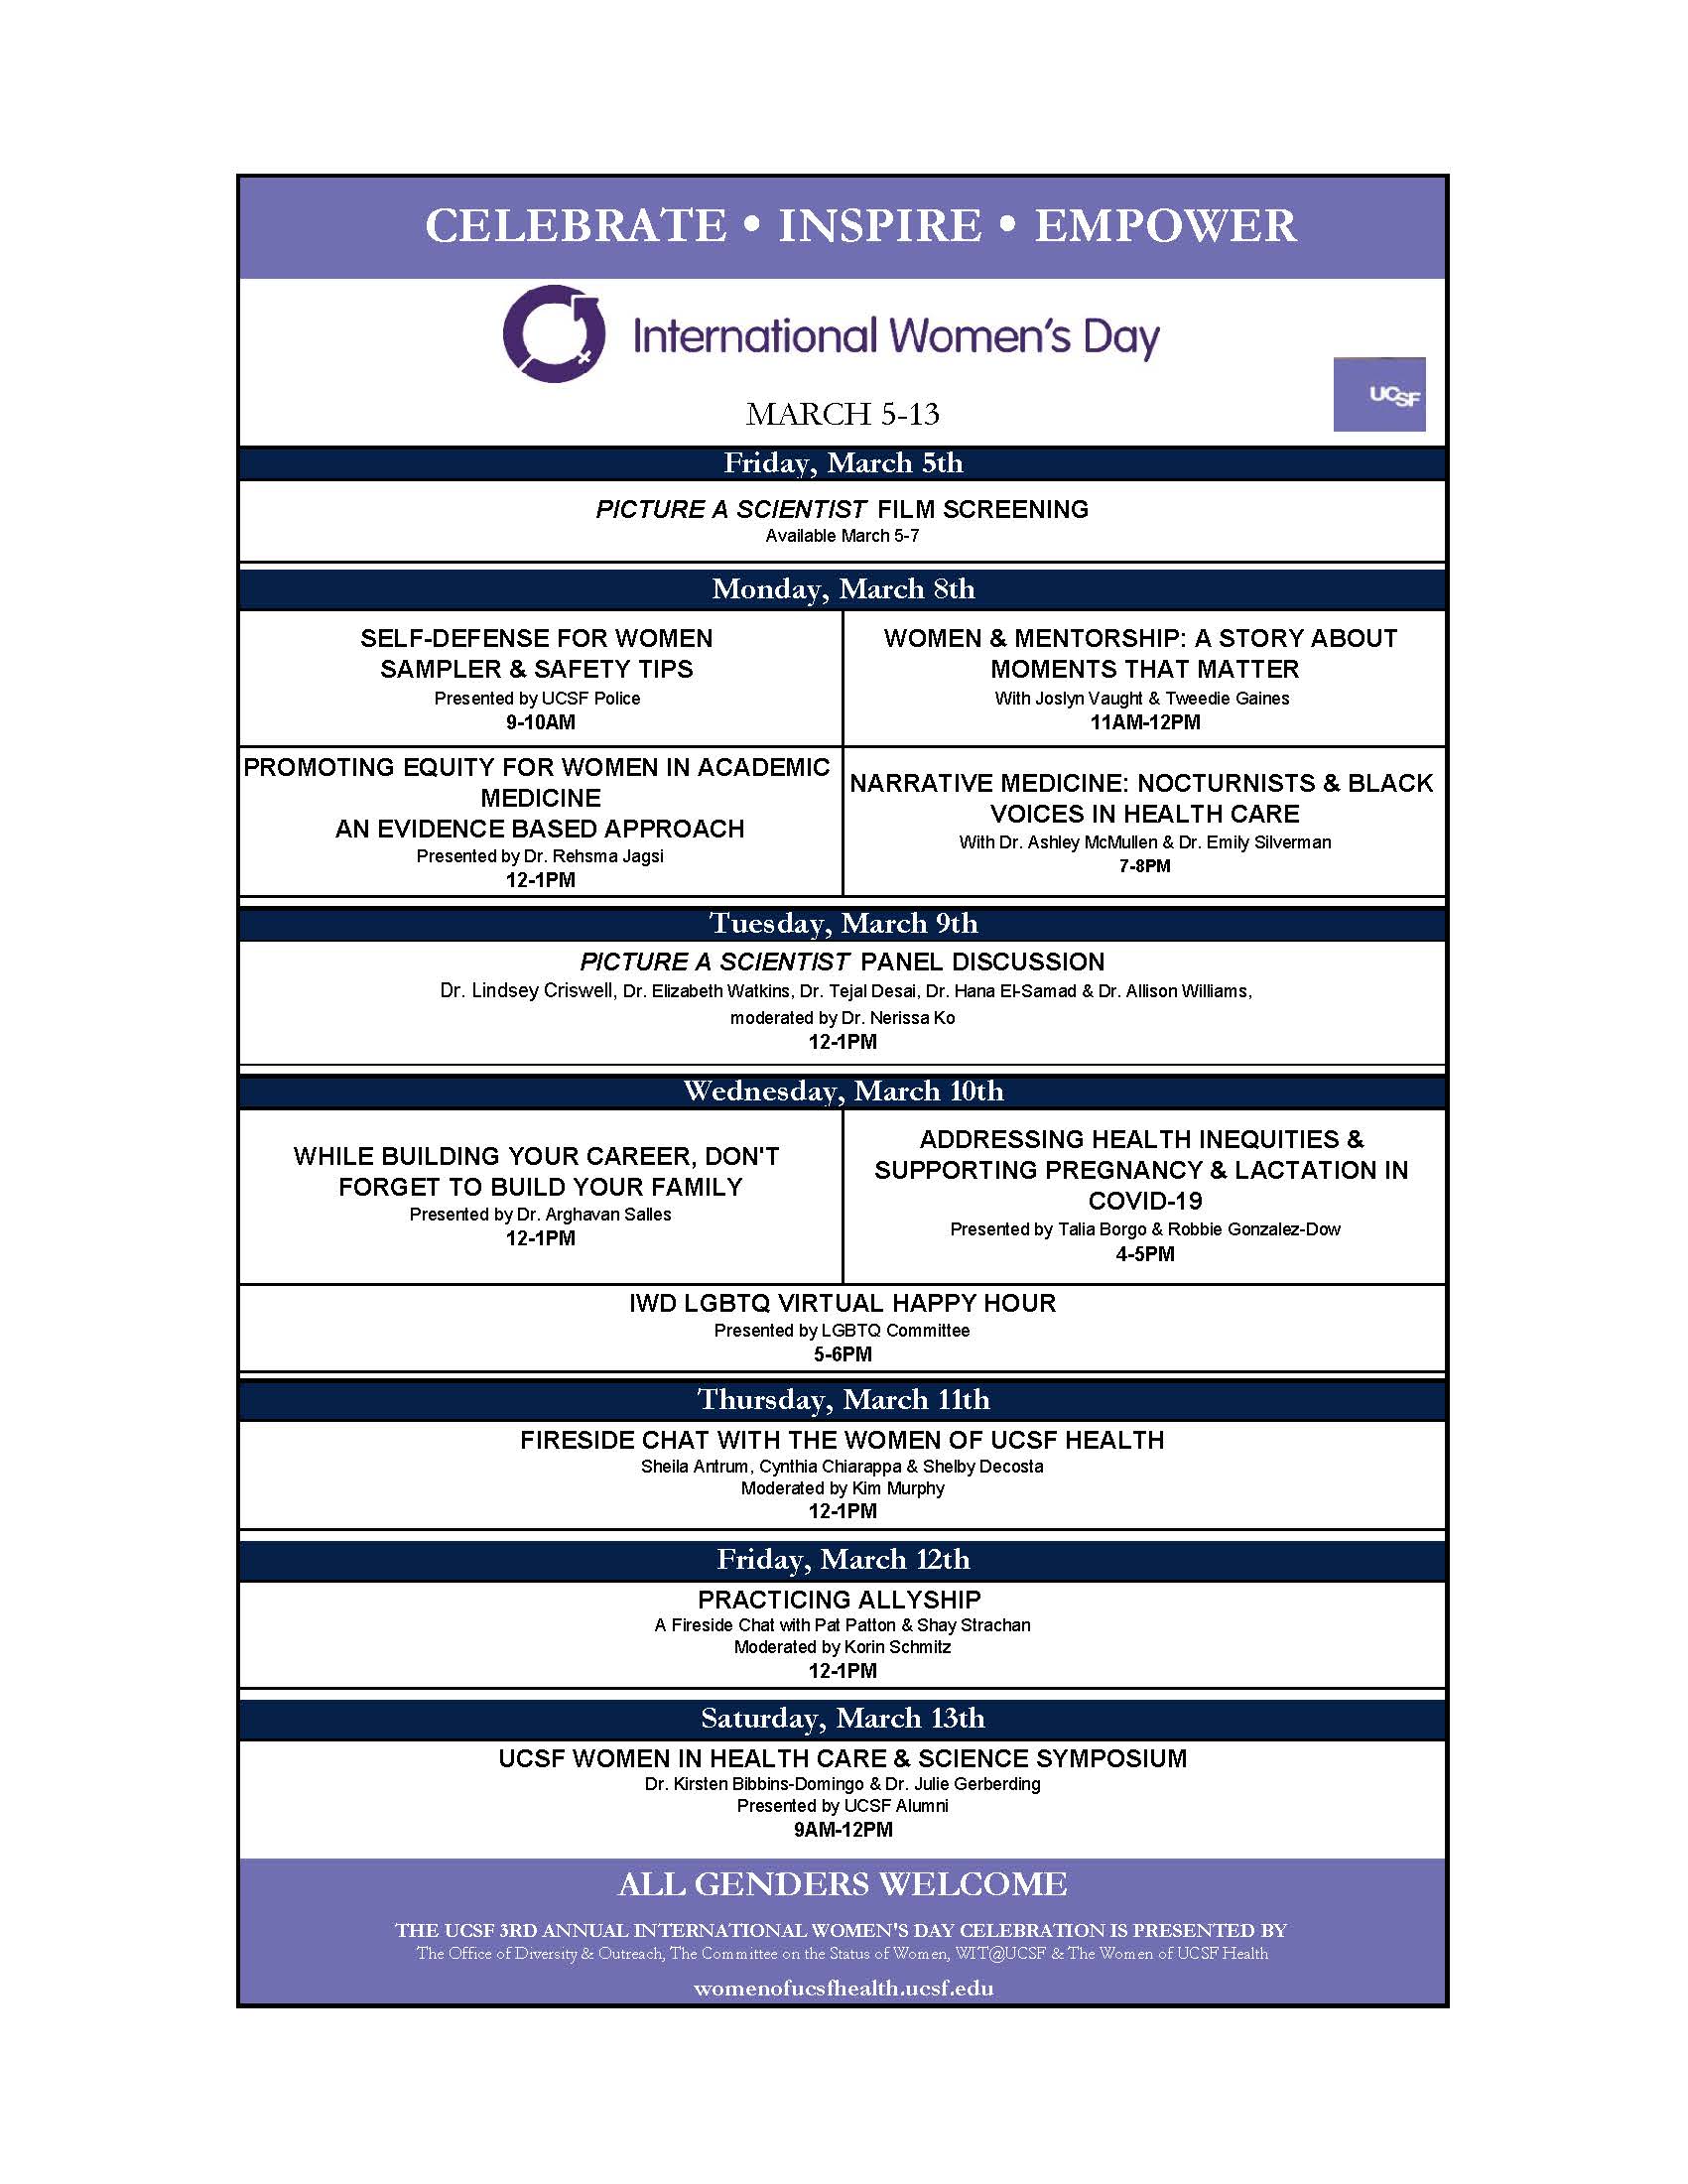 International Women's Day 2021 Calendar of Events Women of UCSF Health